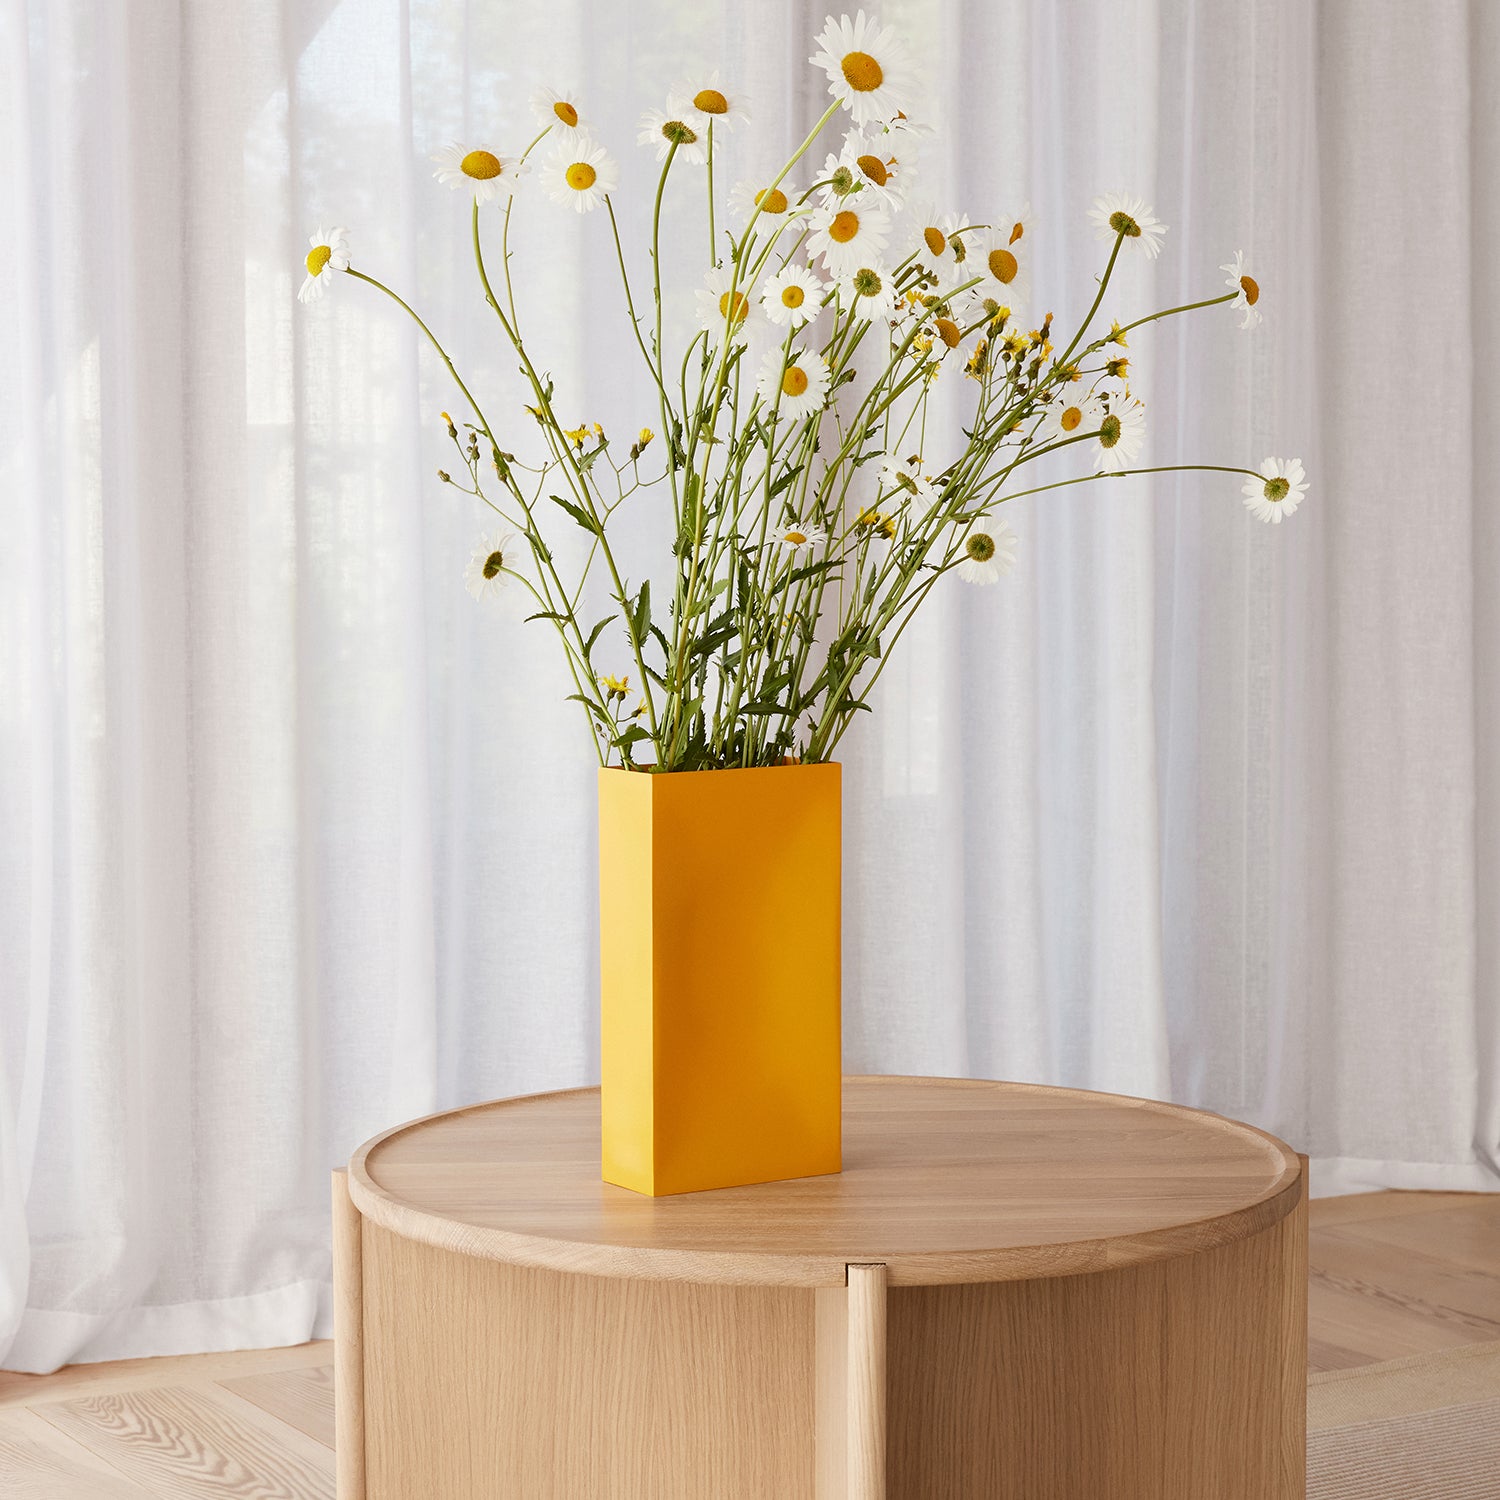 Into Vase - The Design Choice